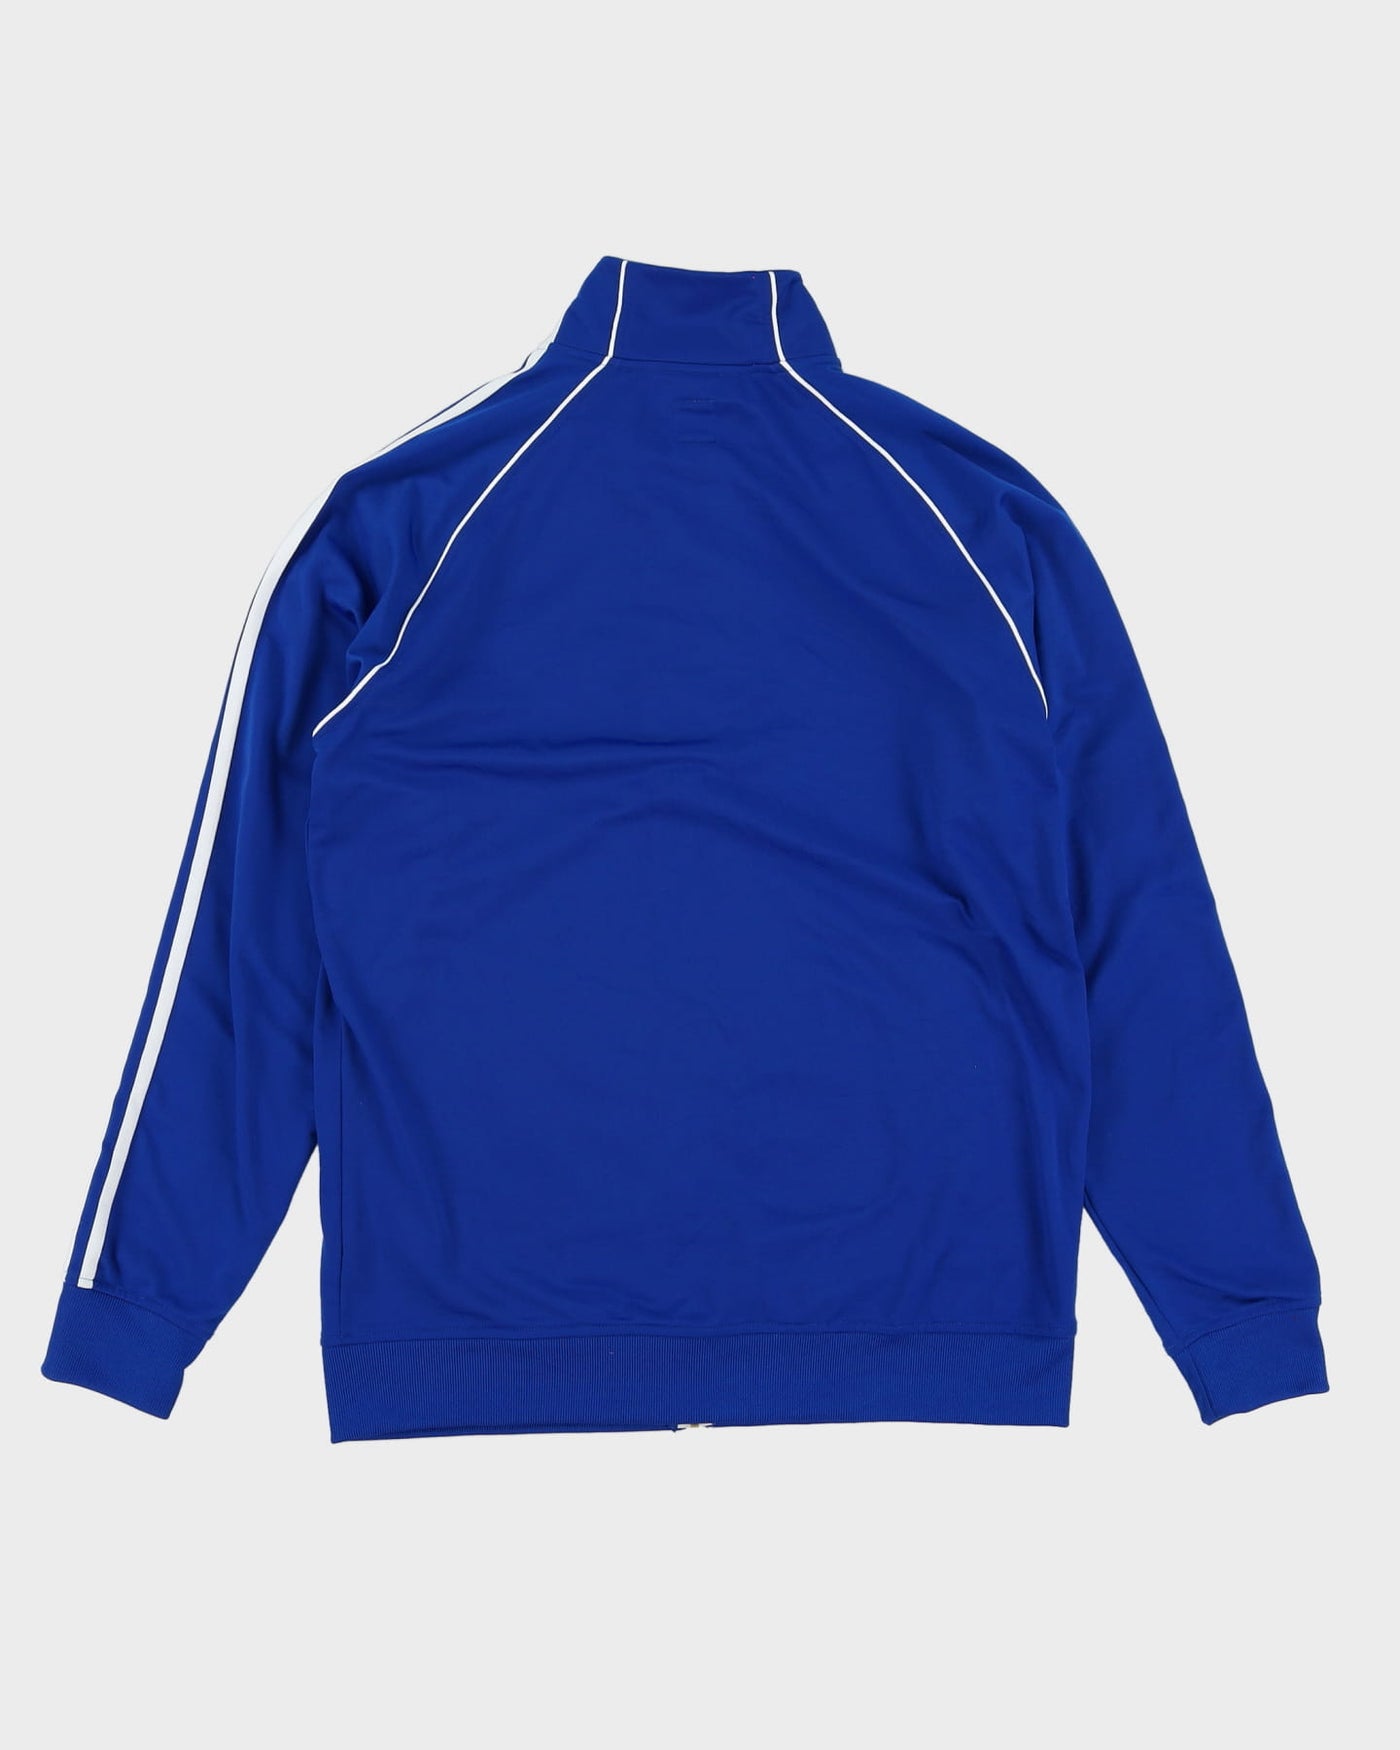 Adidas Blue / White Track Jacket - M / L